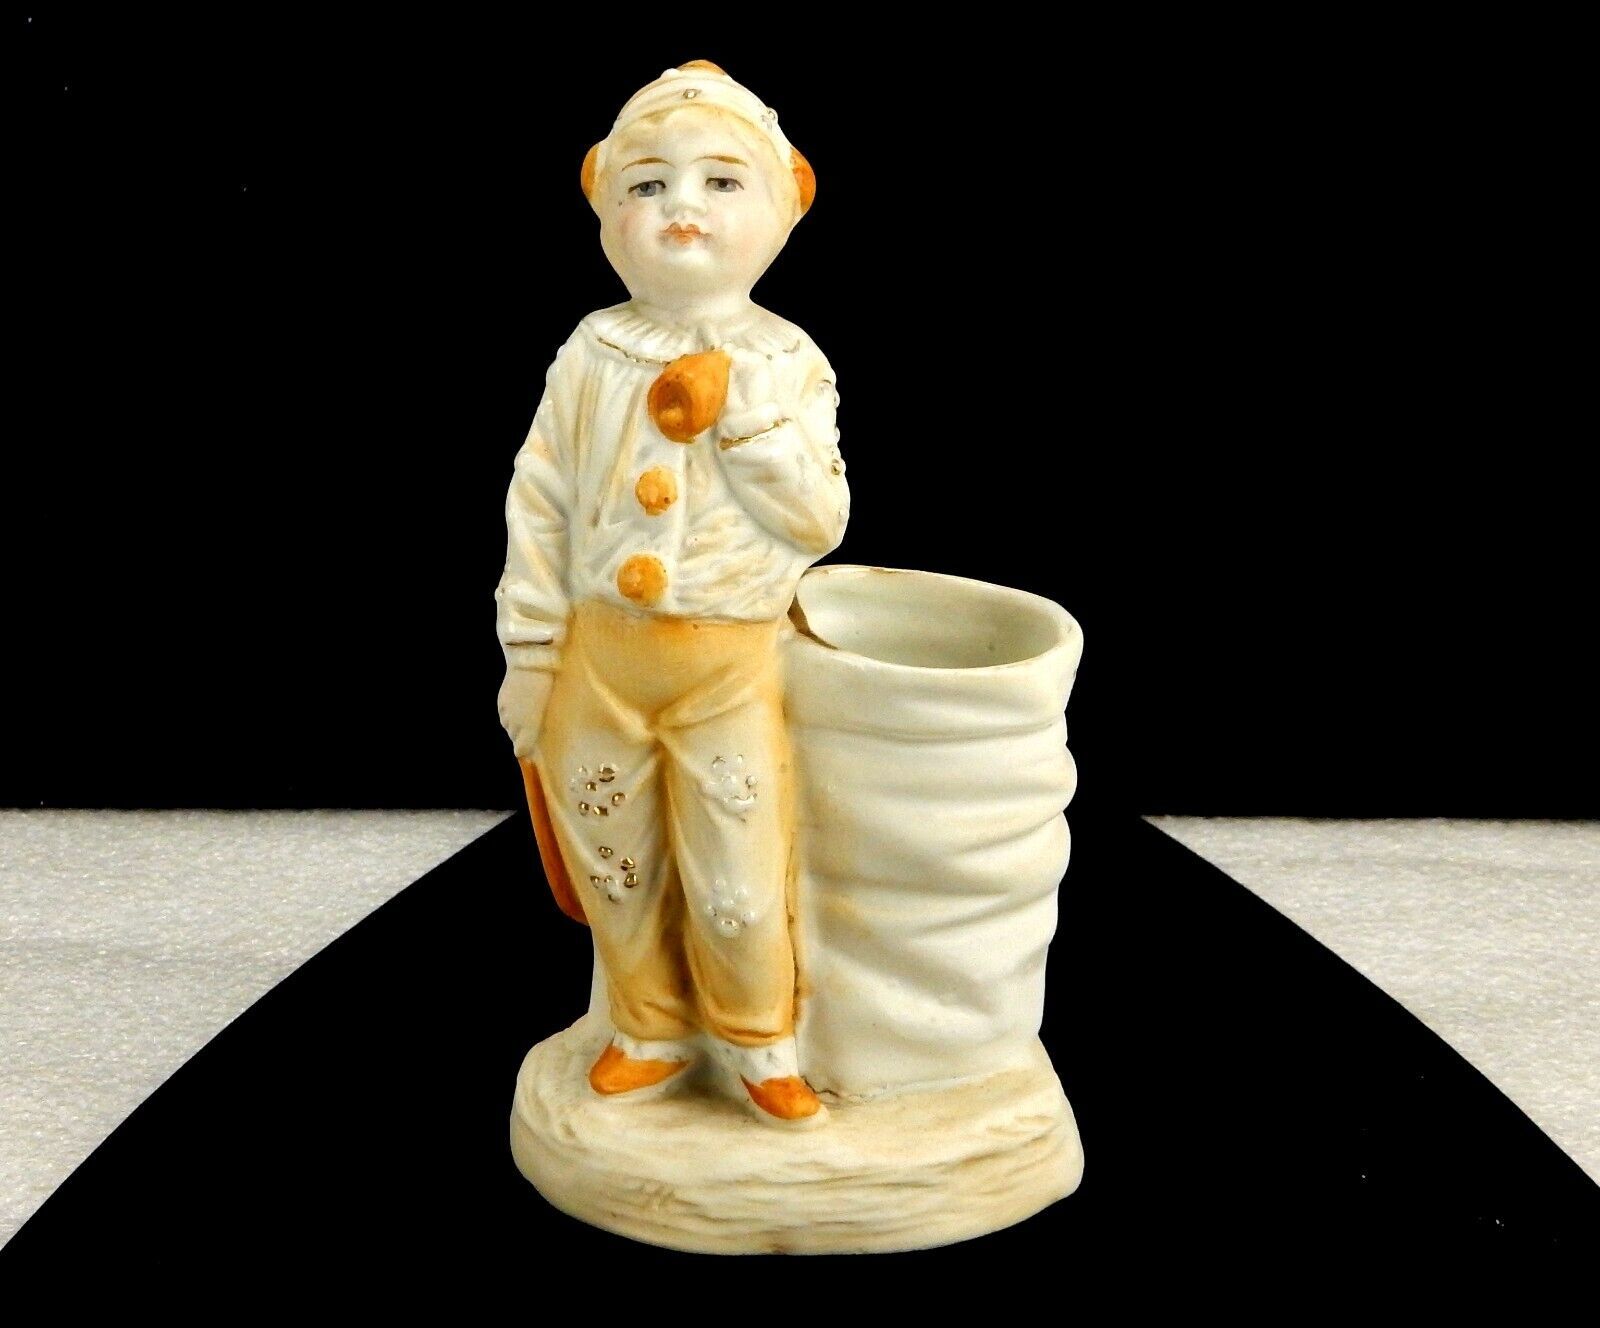 Primary image for Bisque Porcelain Figurine Match Holder, Costumed Clown Boy, Pale Orange & White